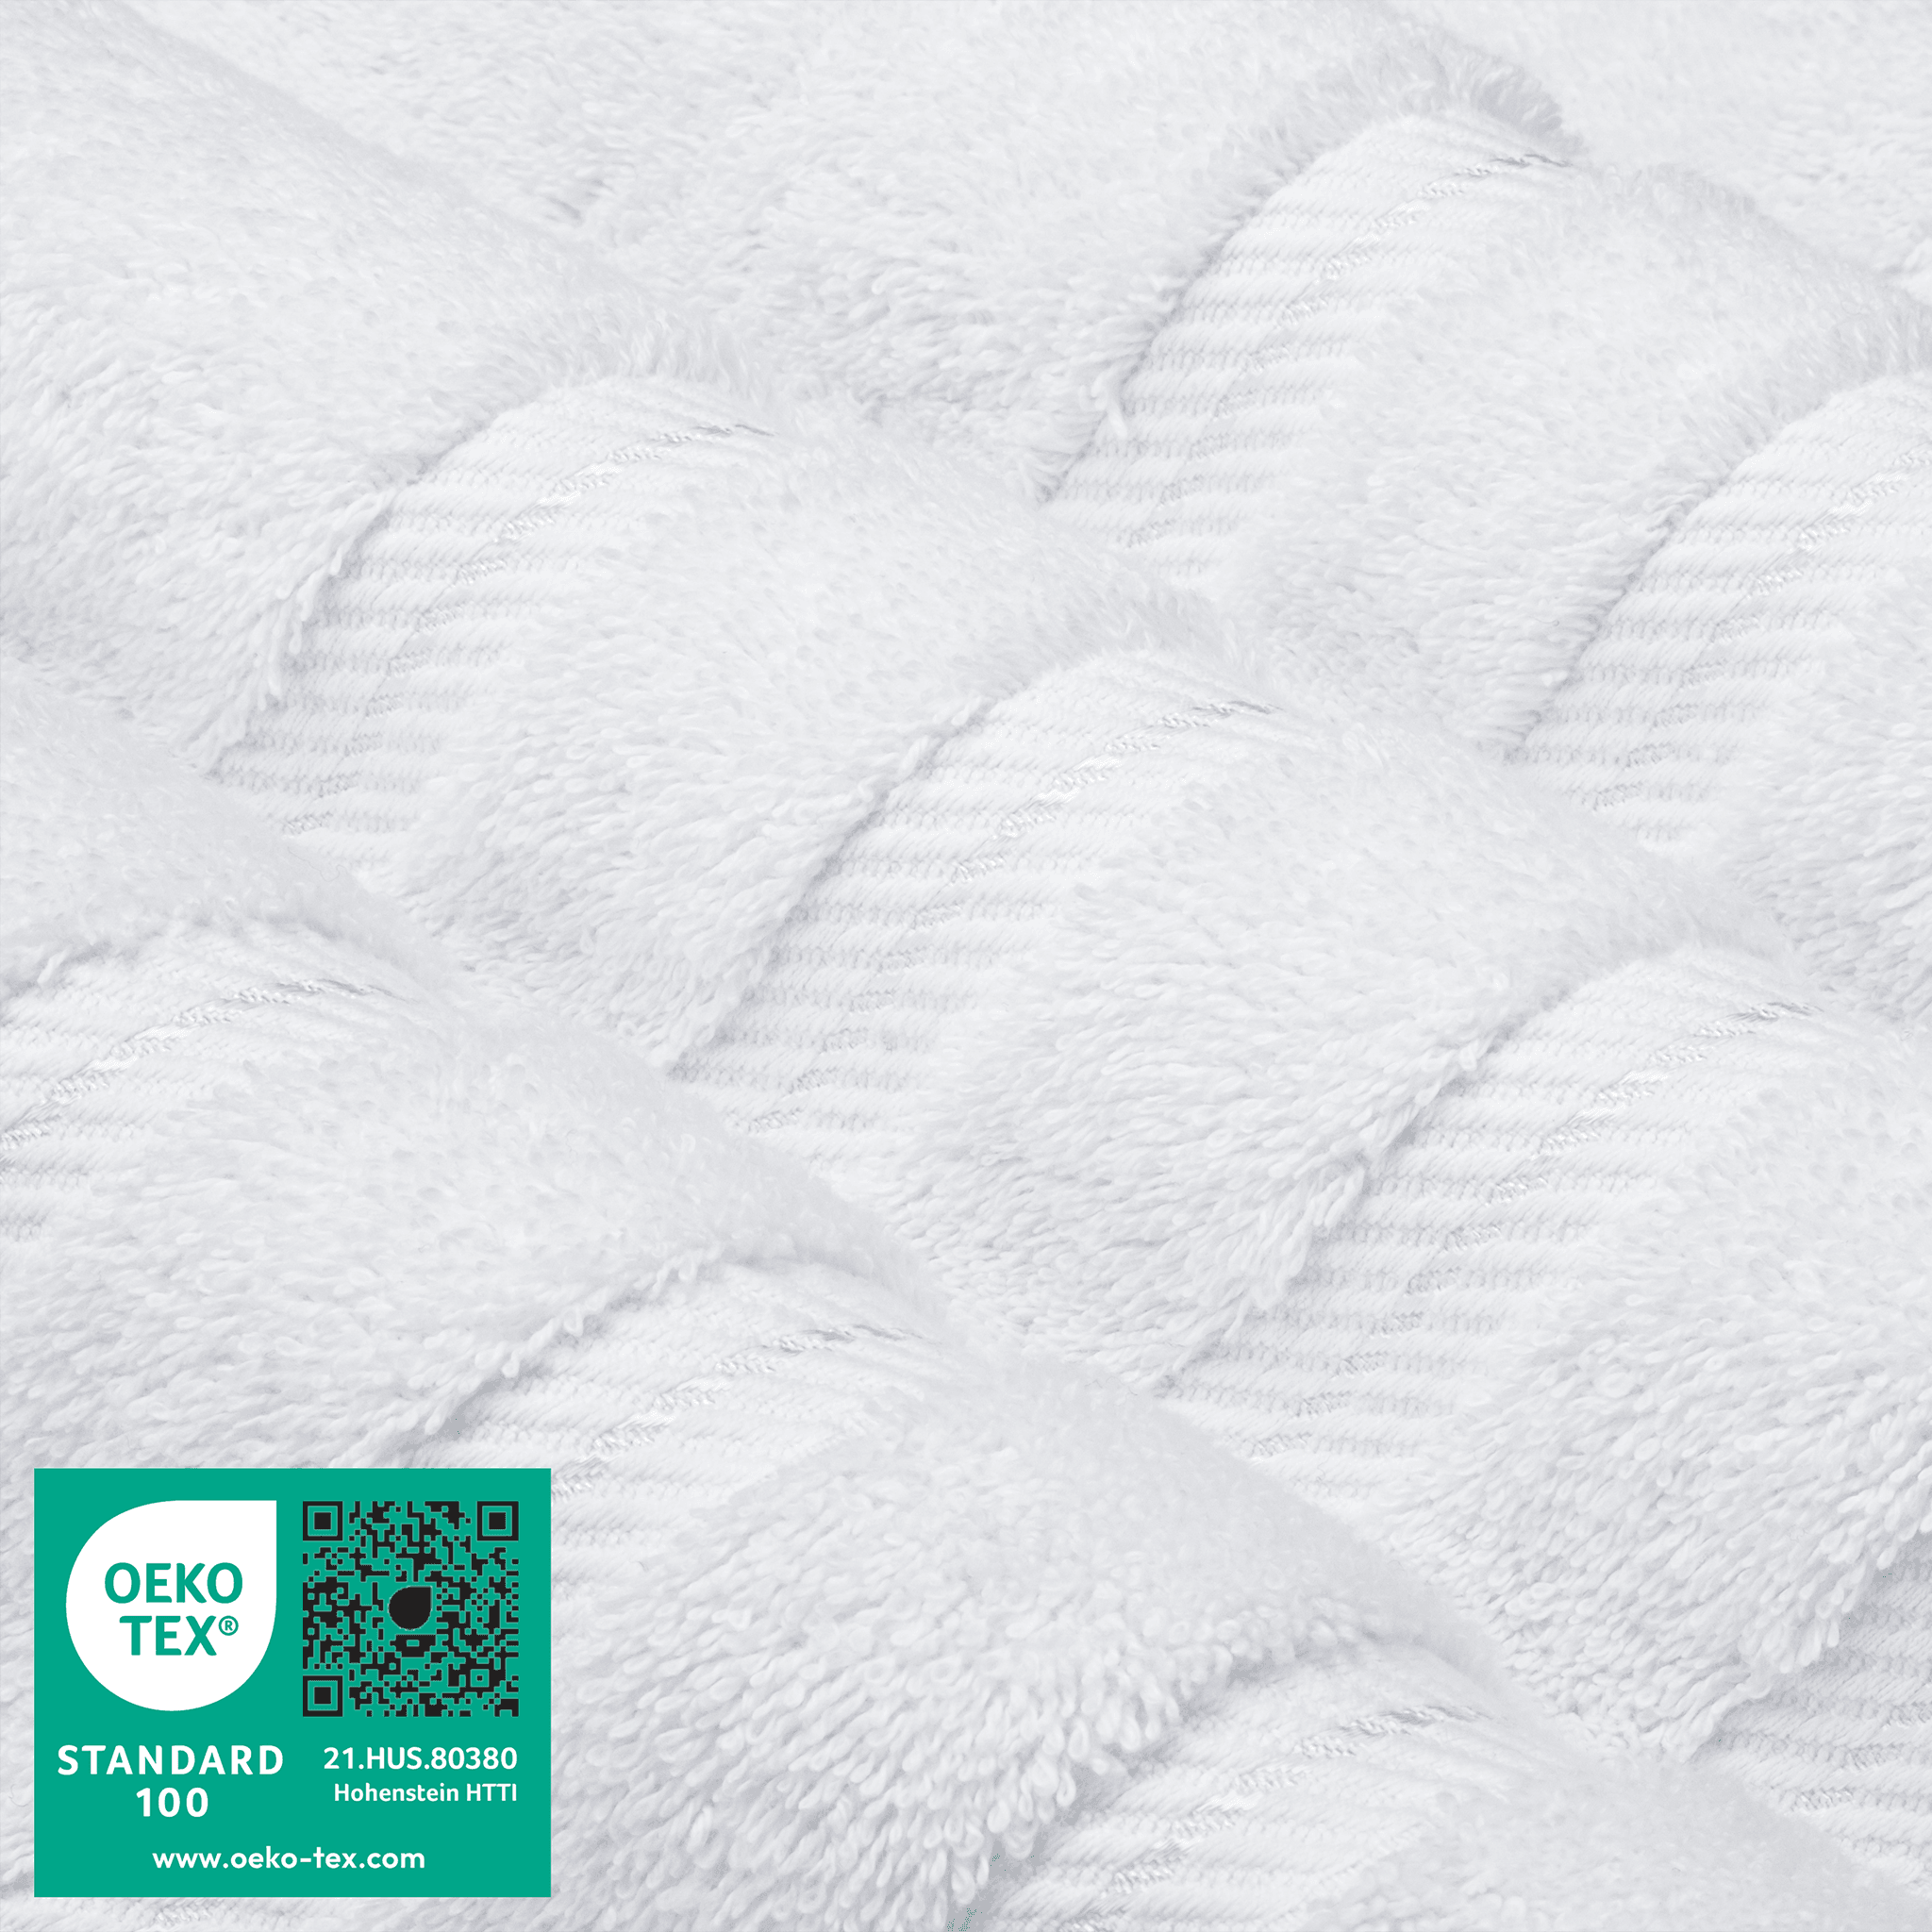 American Soft Linen 100% Turkish Cotton 6 Piece Towel Set - White